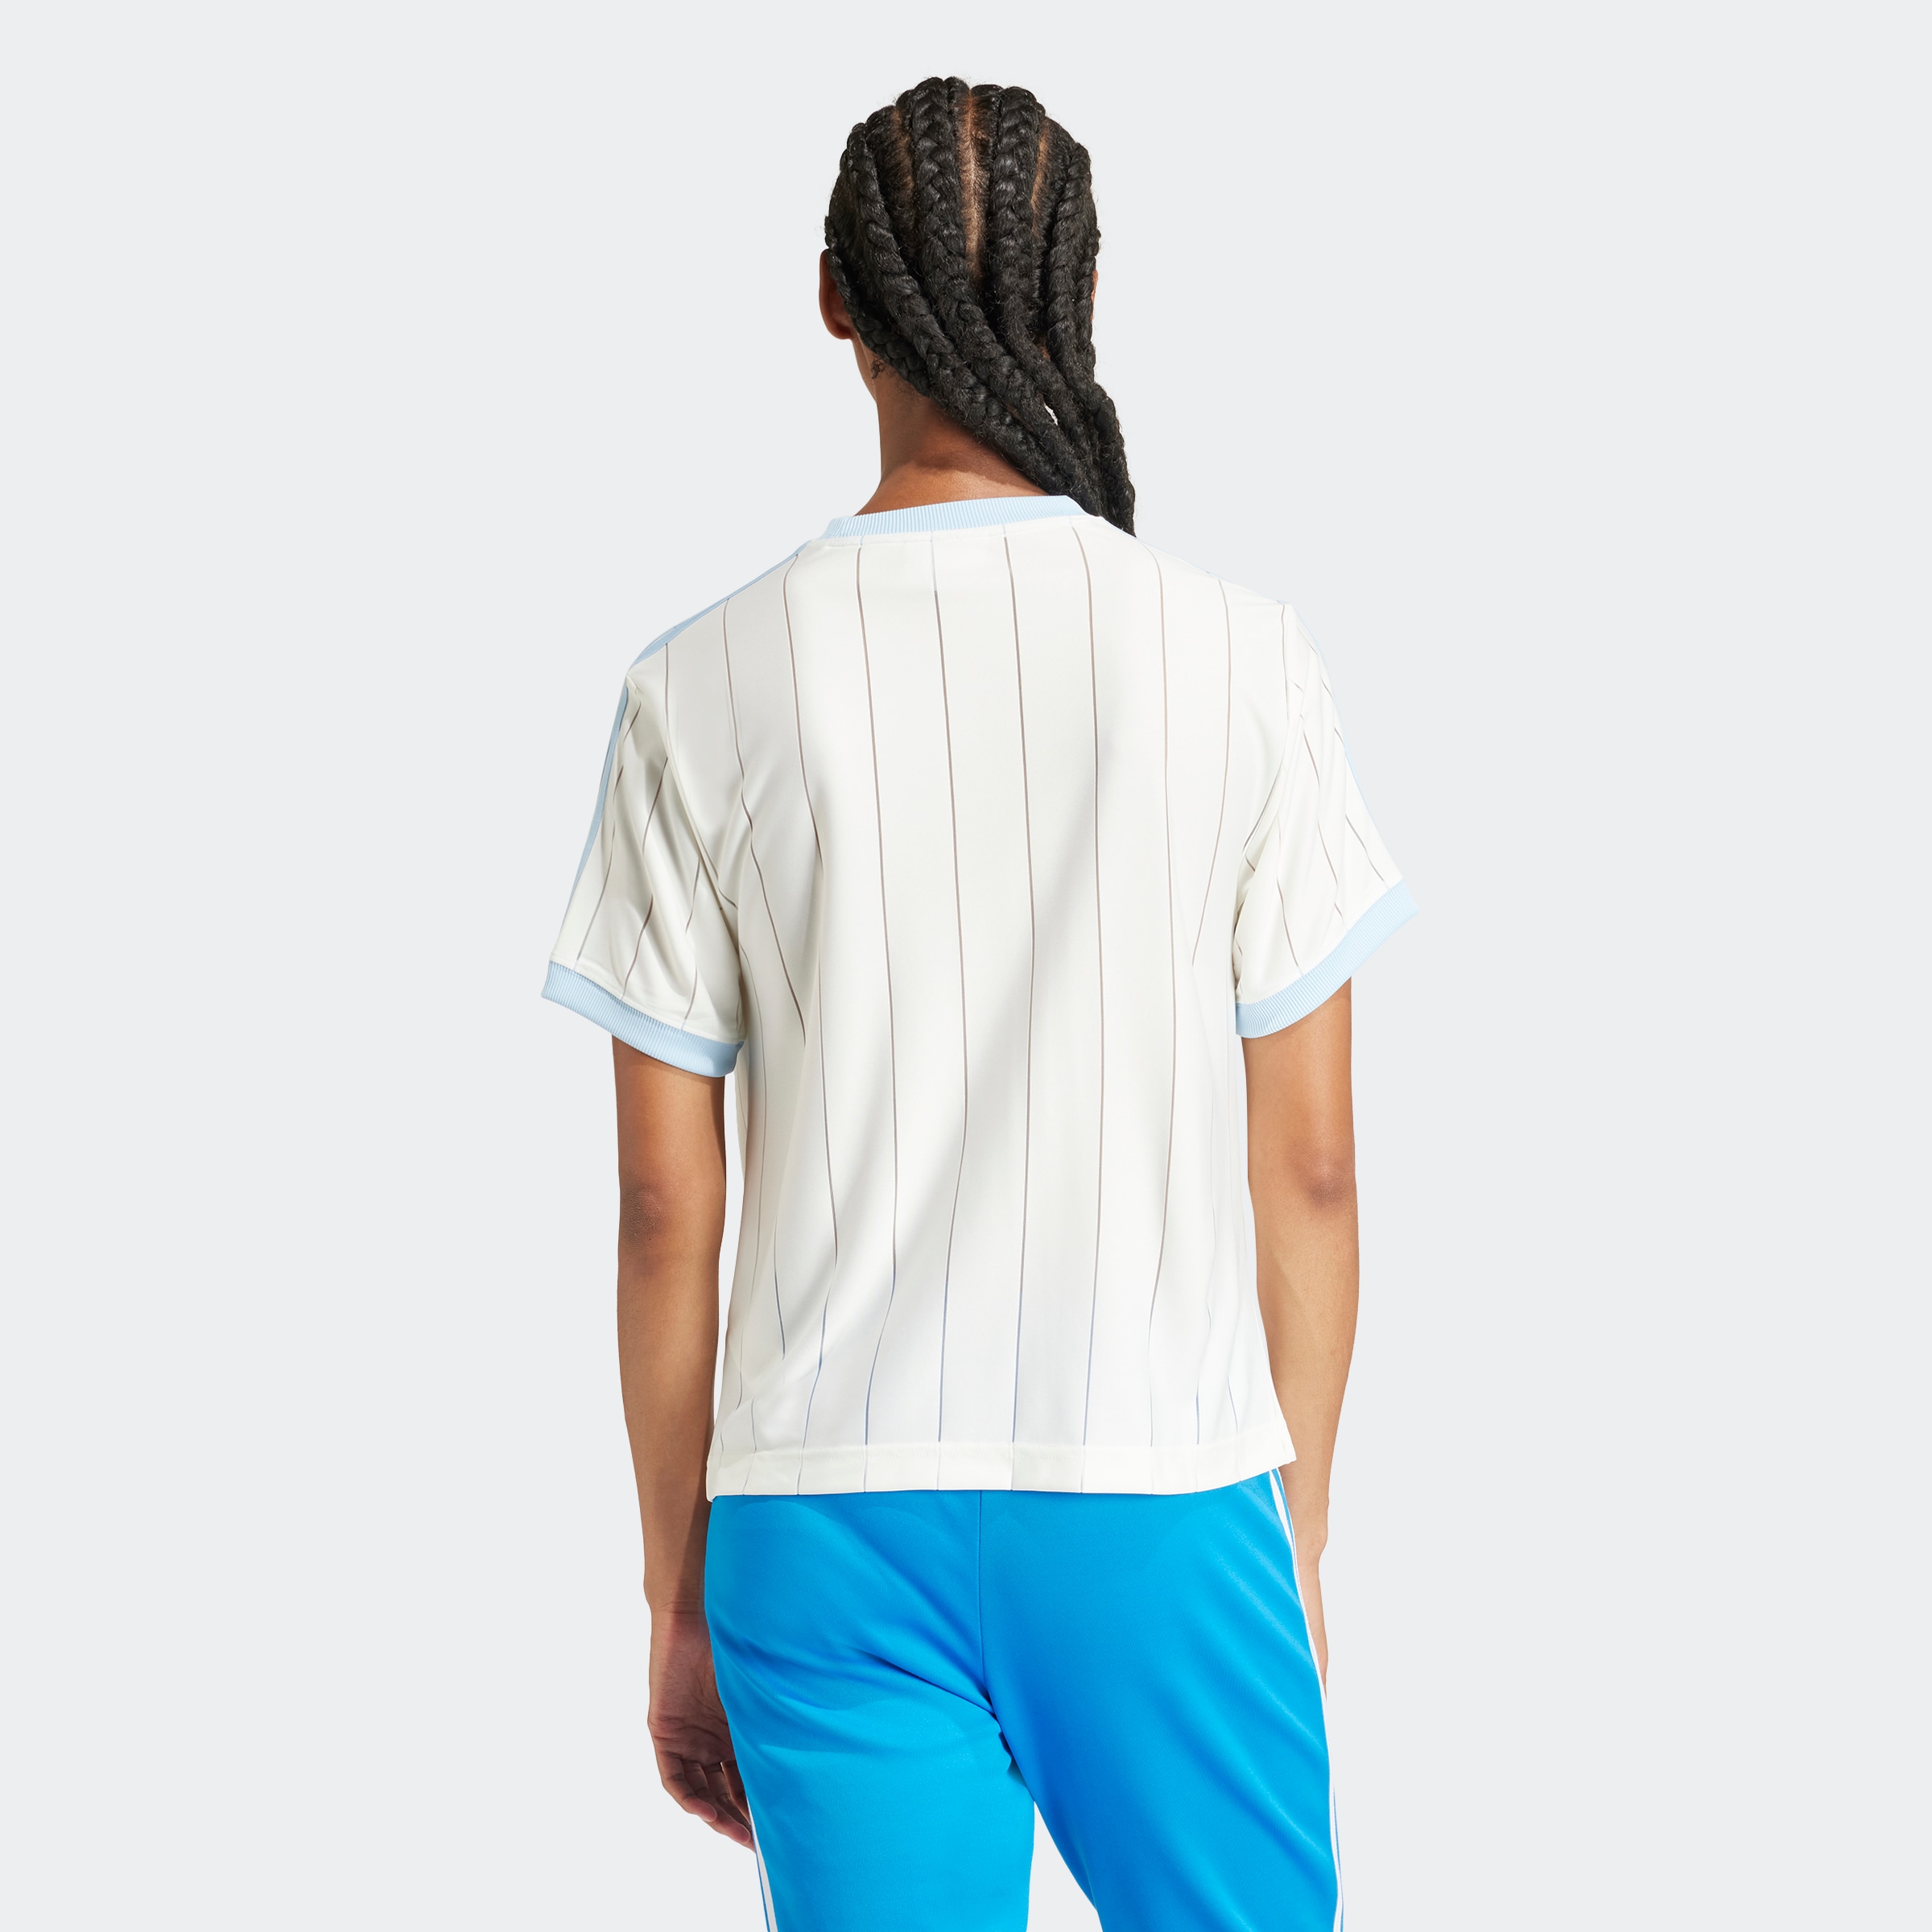 adidas Originals T-Shirt »3 STRIPE TEE«